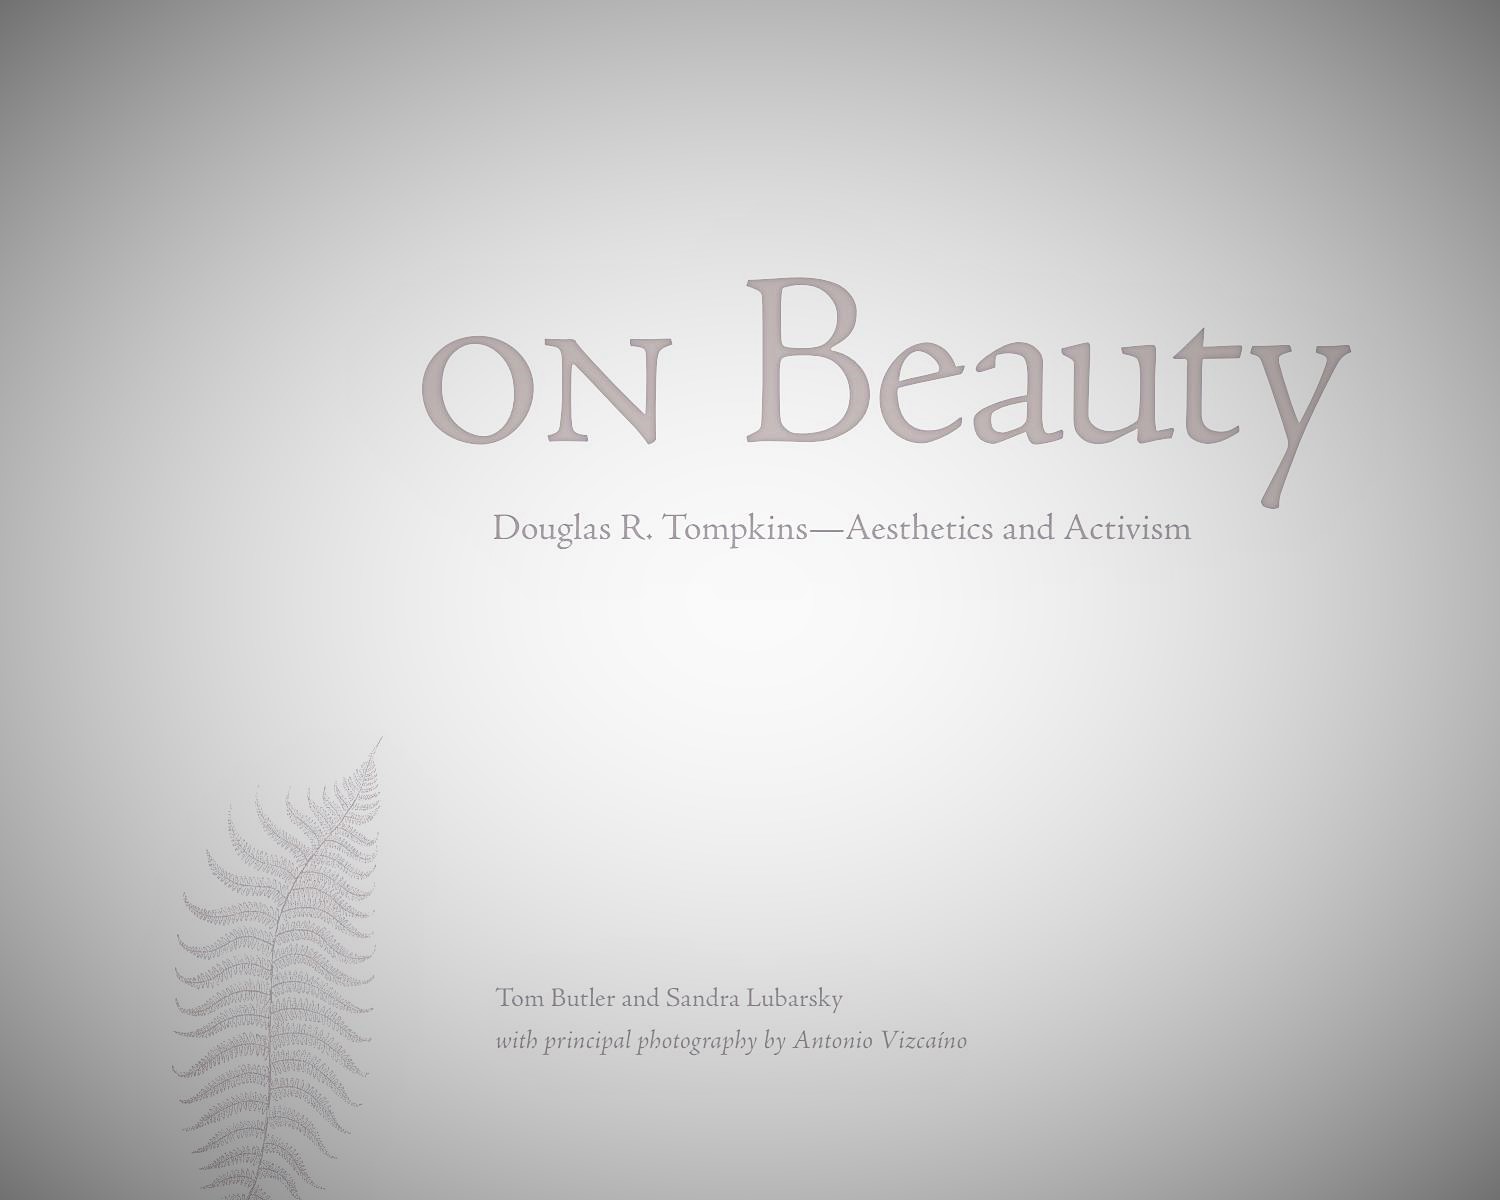 On Beauty: Douglas R. Tompkins – Aesthetics and Activism